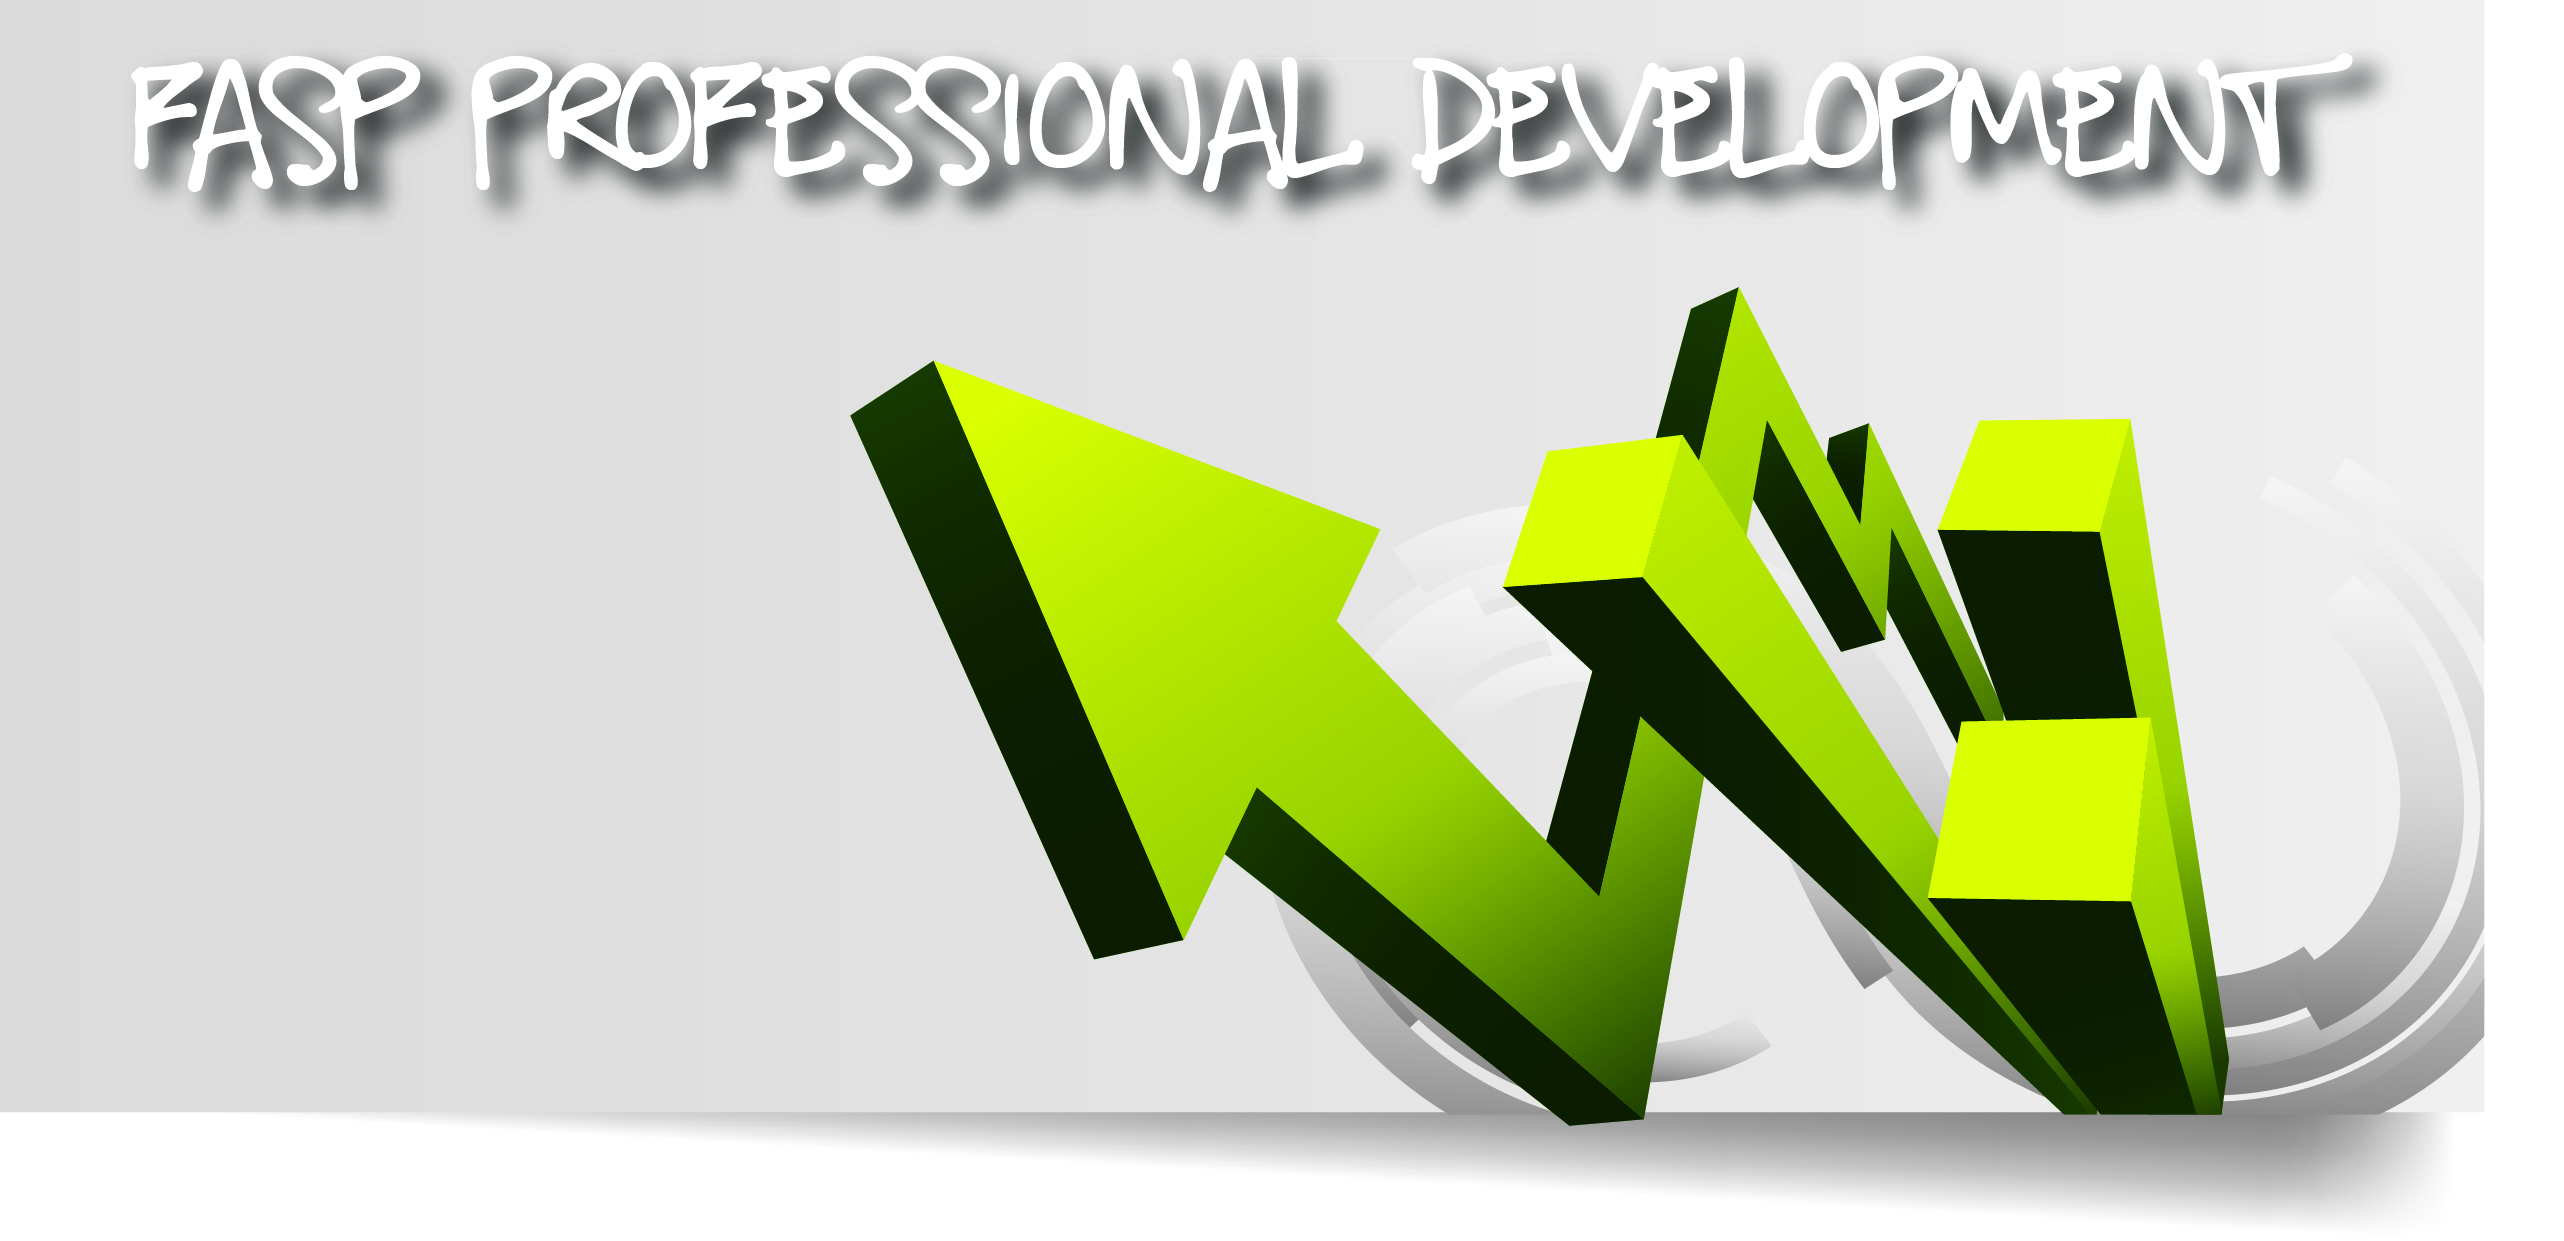 FASP Professional Development